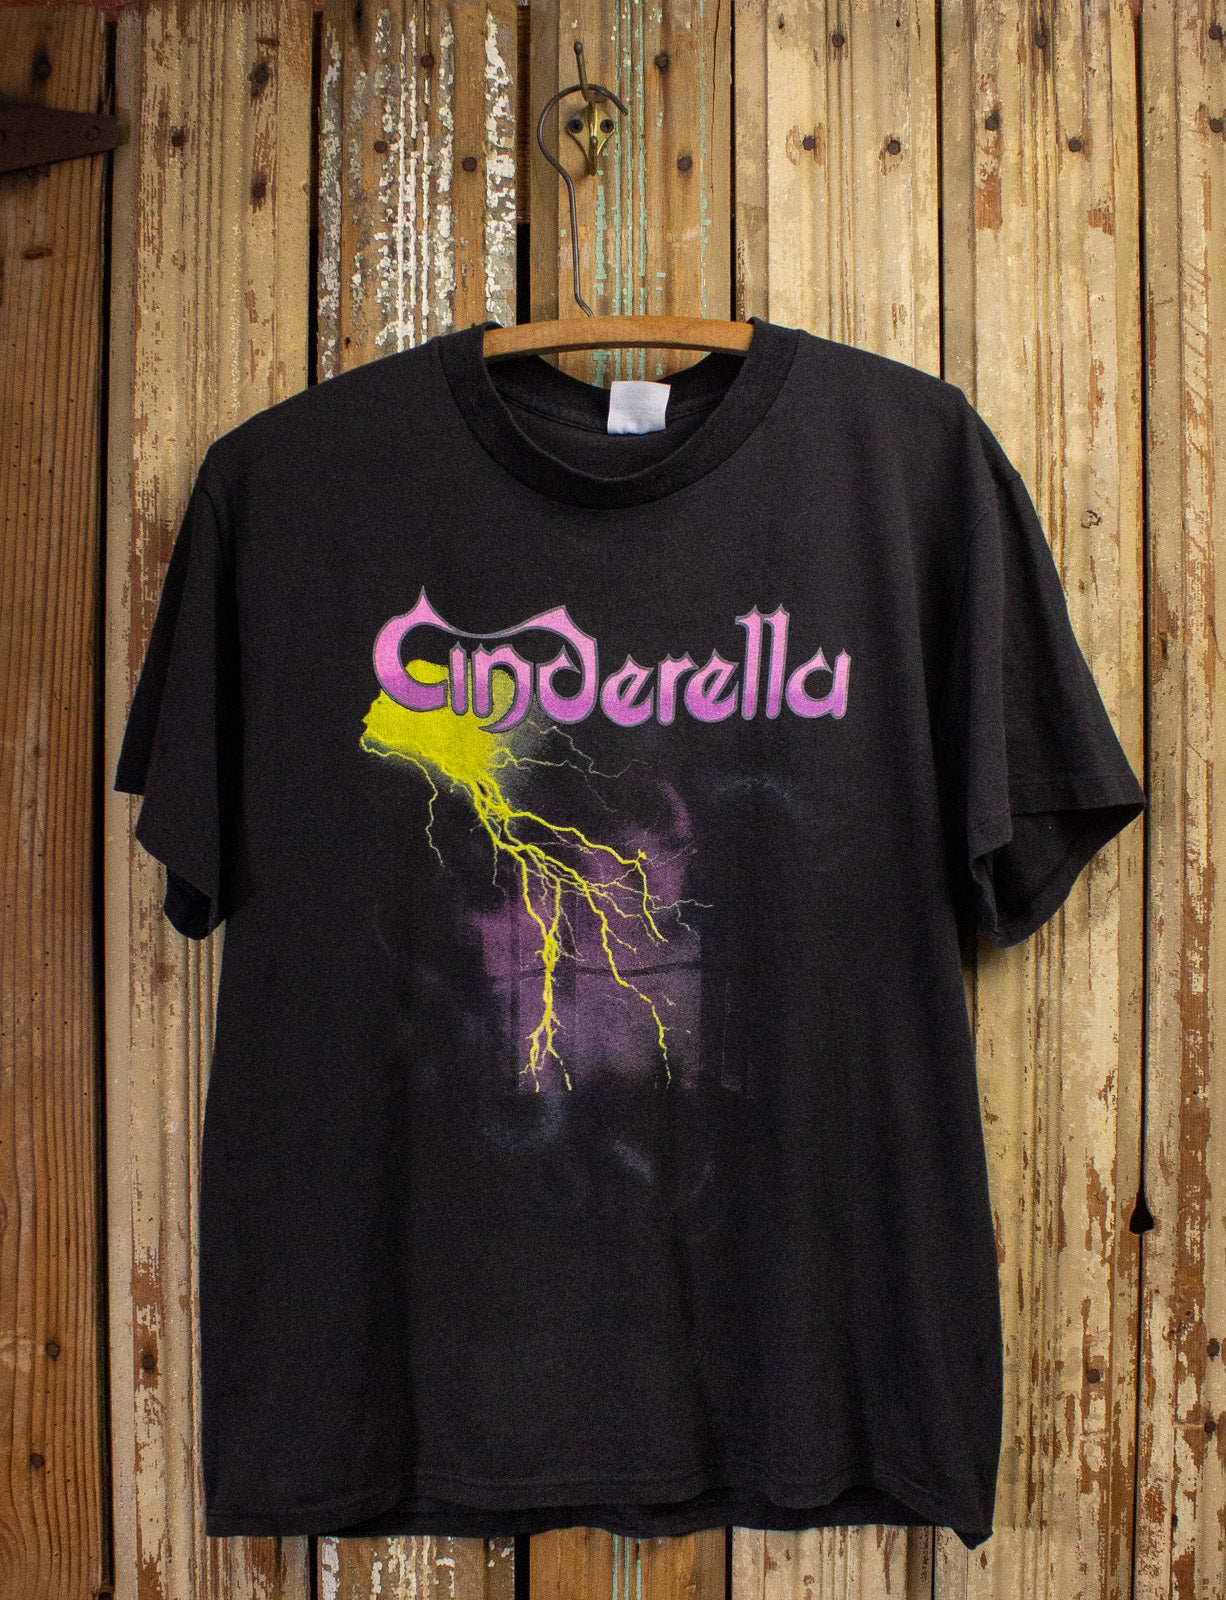 Vintage Cinderella Night Songs Concert T Shirt 80s Black Large